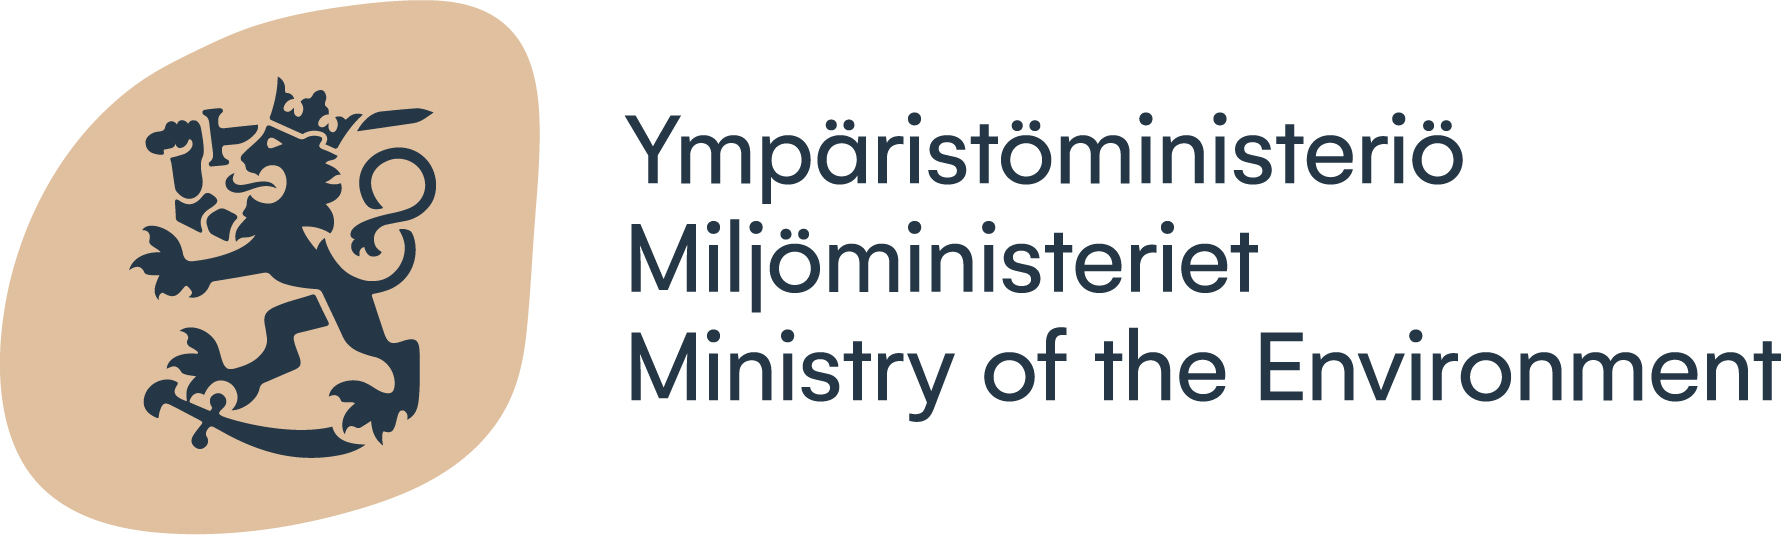 Ympäristöministeriön logo.